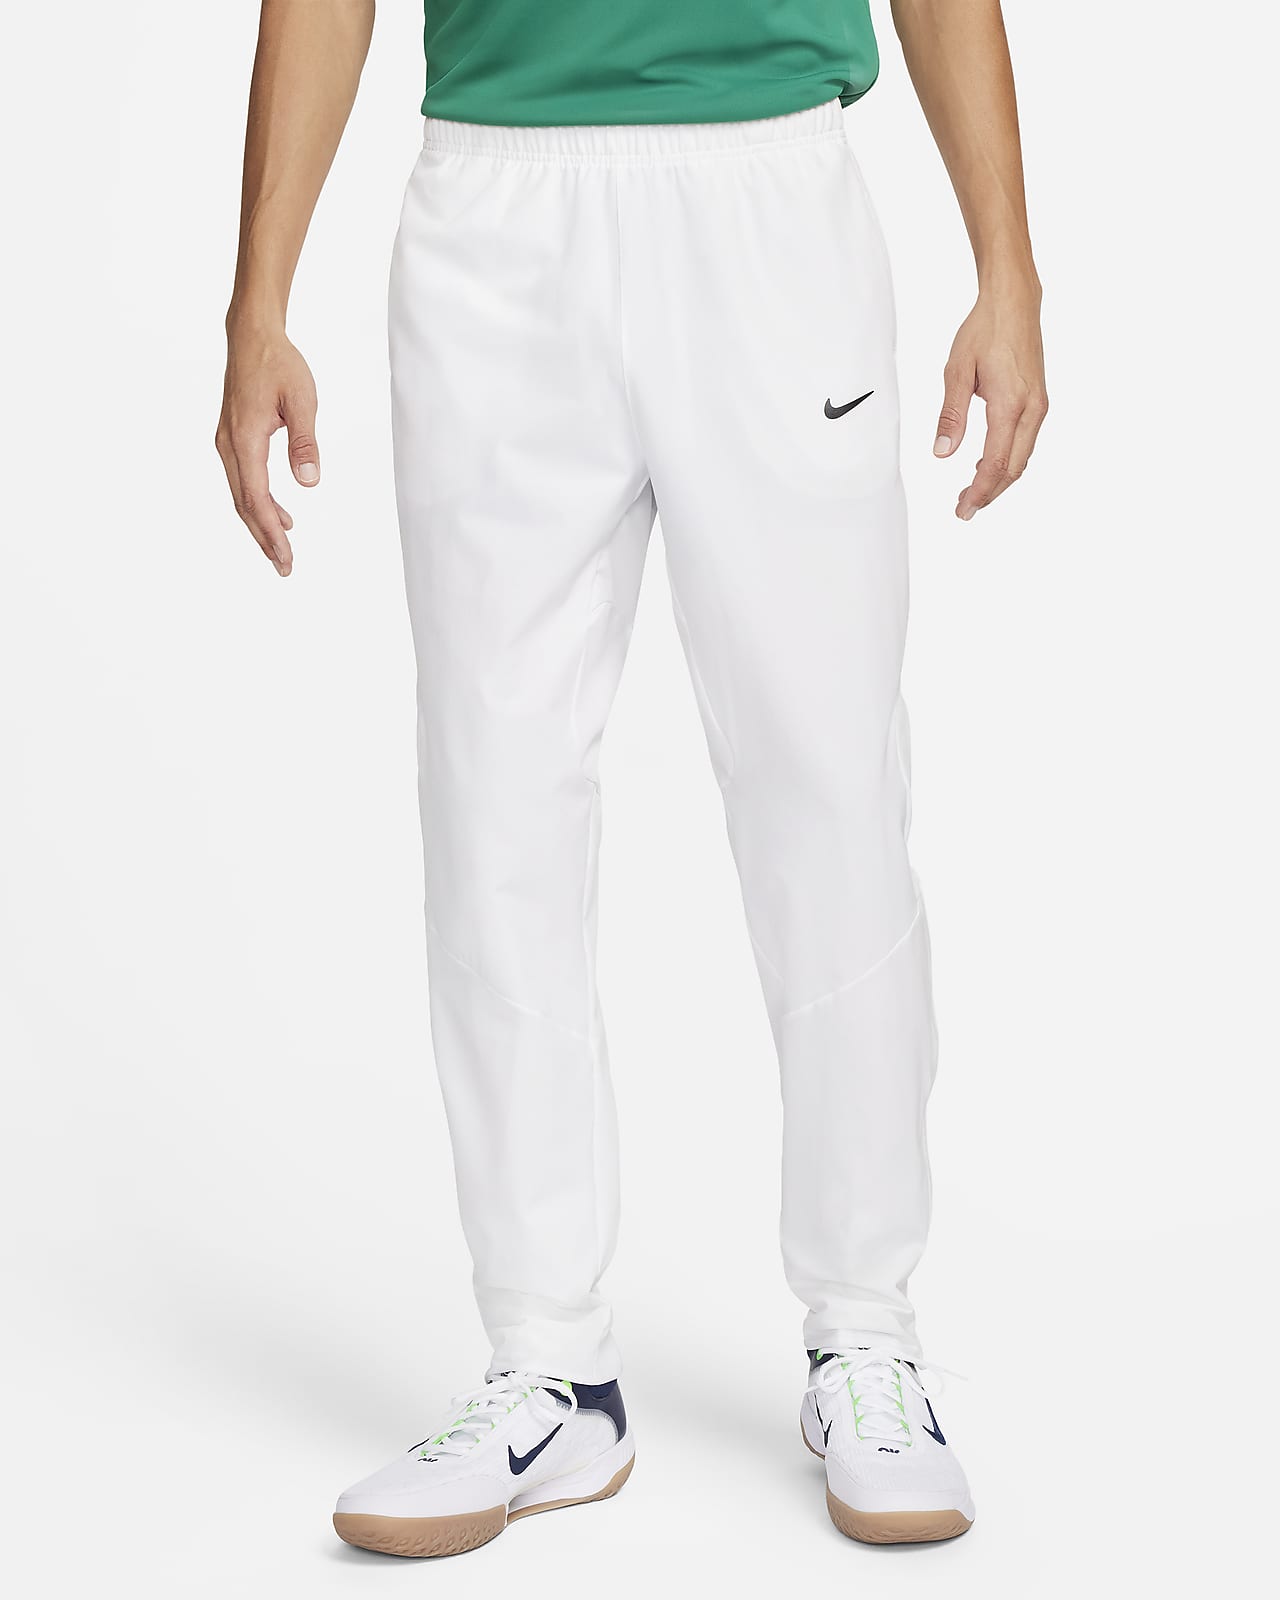 NikeCourt Advantage Men's Tennis Trousers - Blue | DA4376-491 | FOOTY.COM